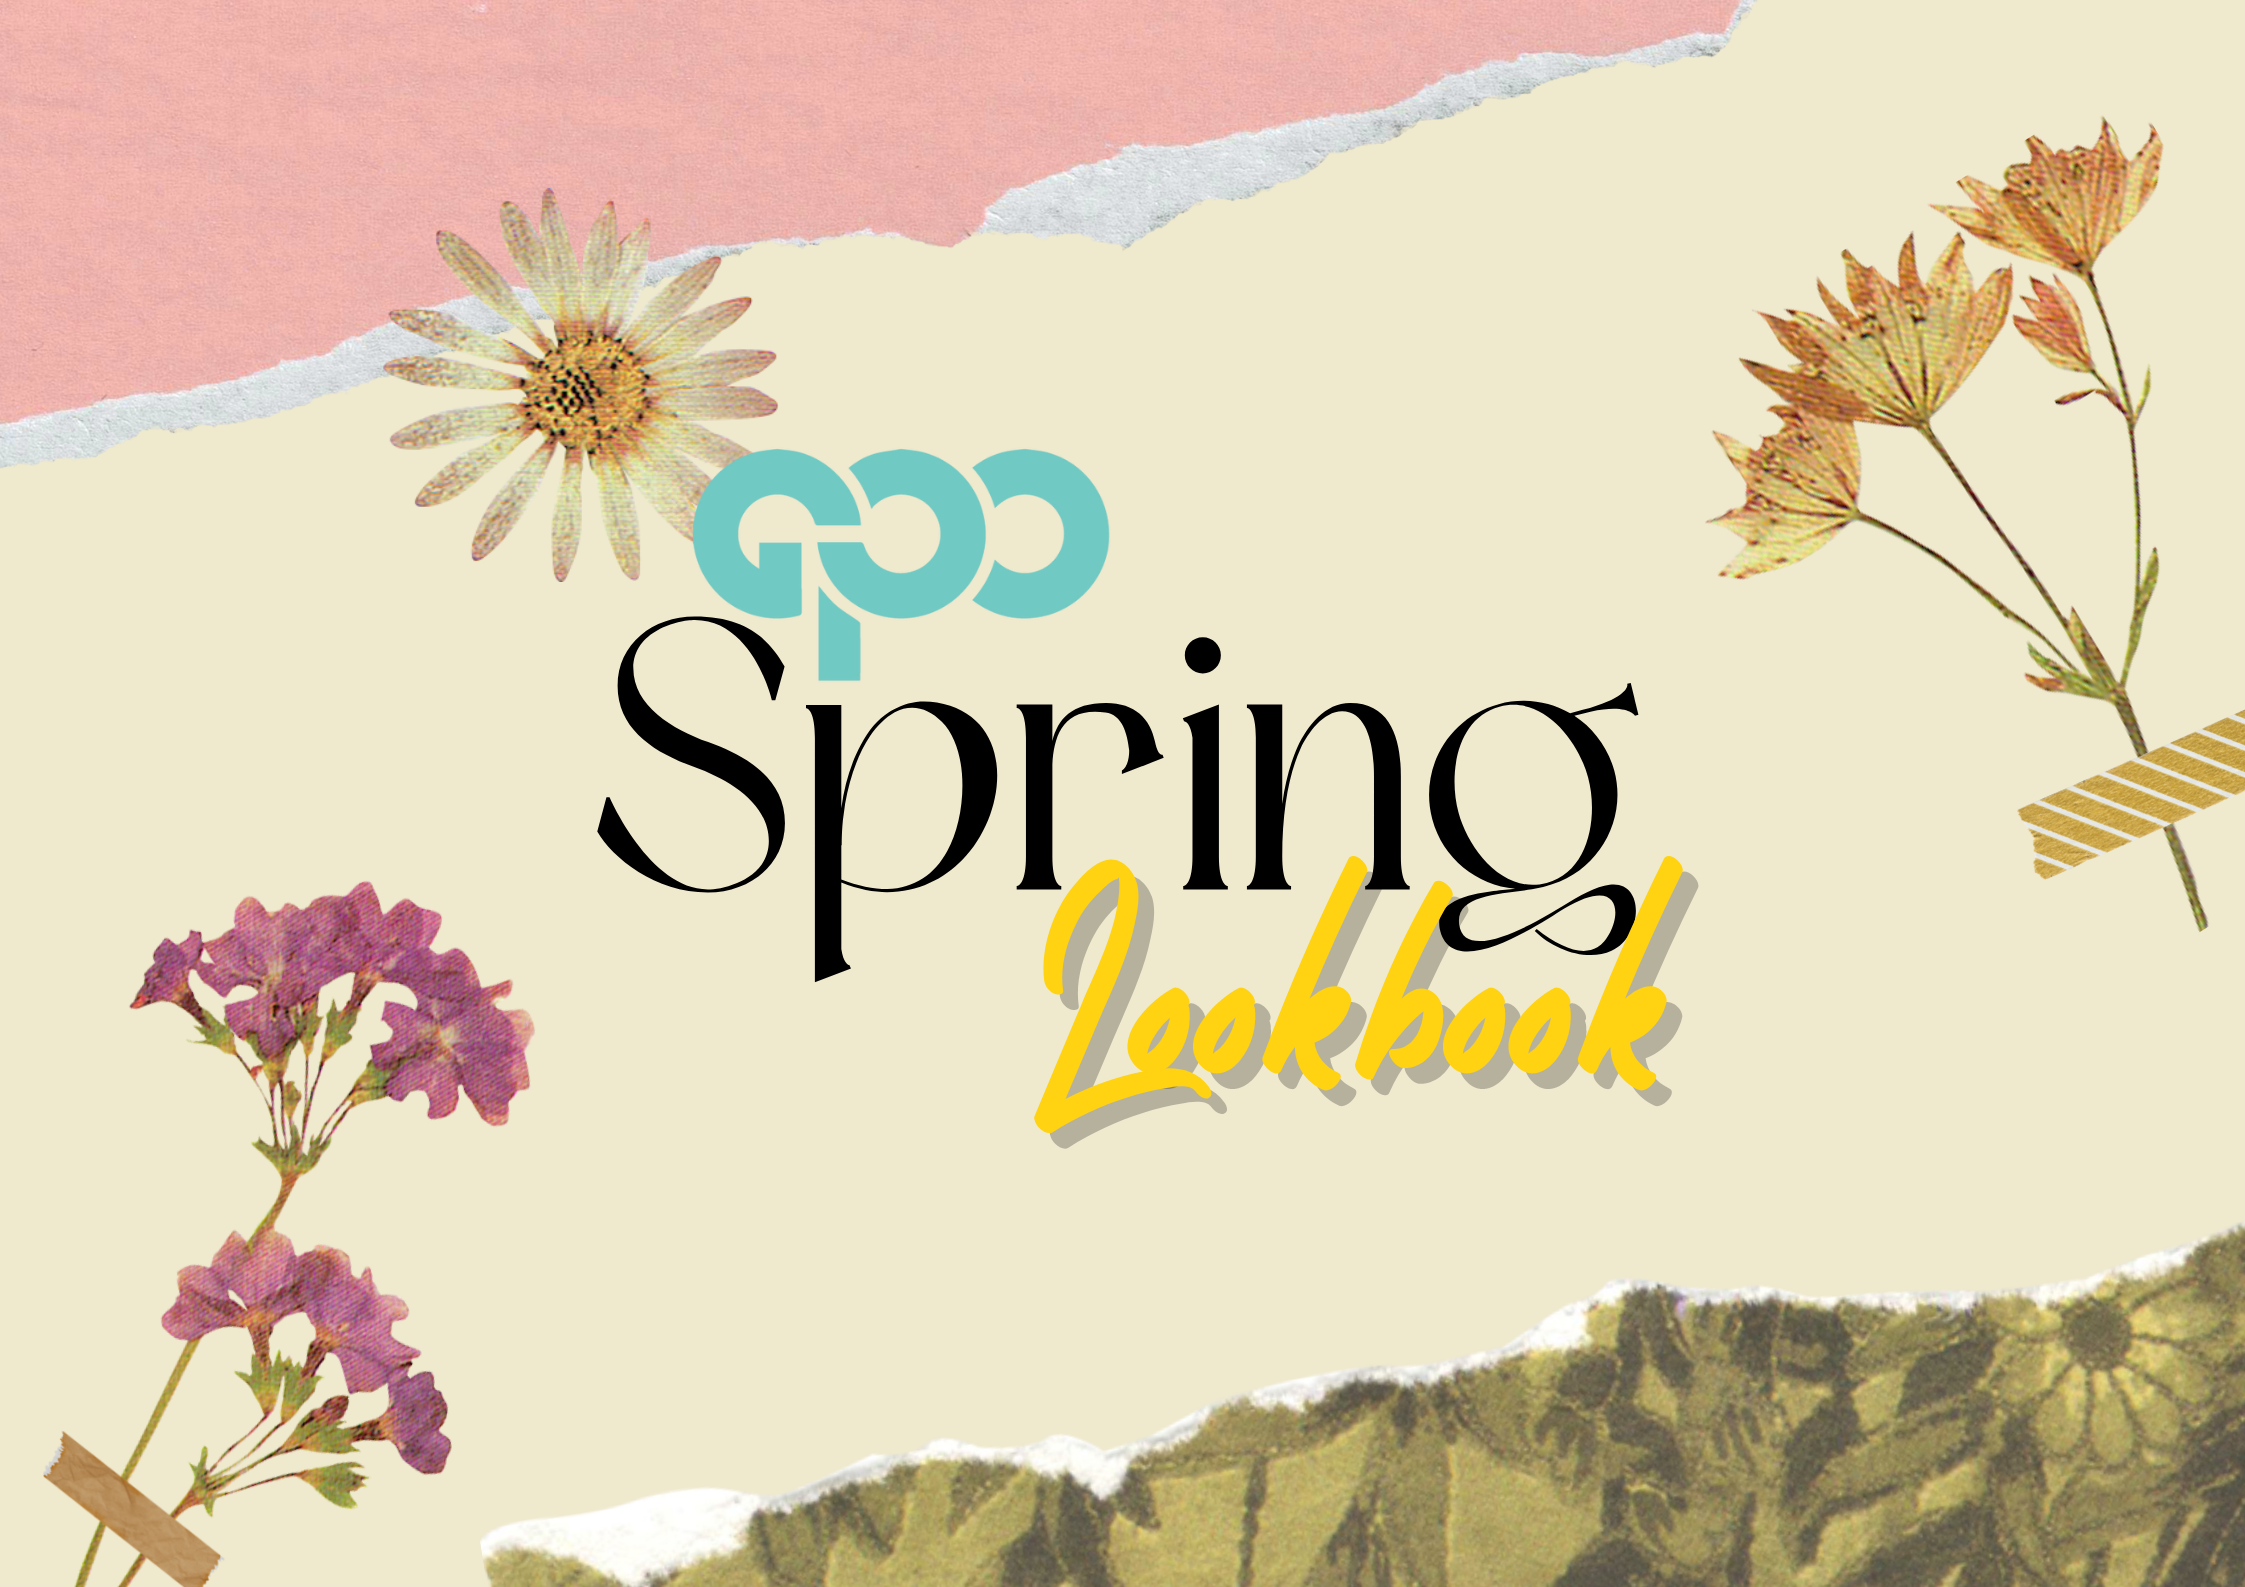 Spring Lookbook 2022